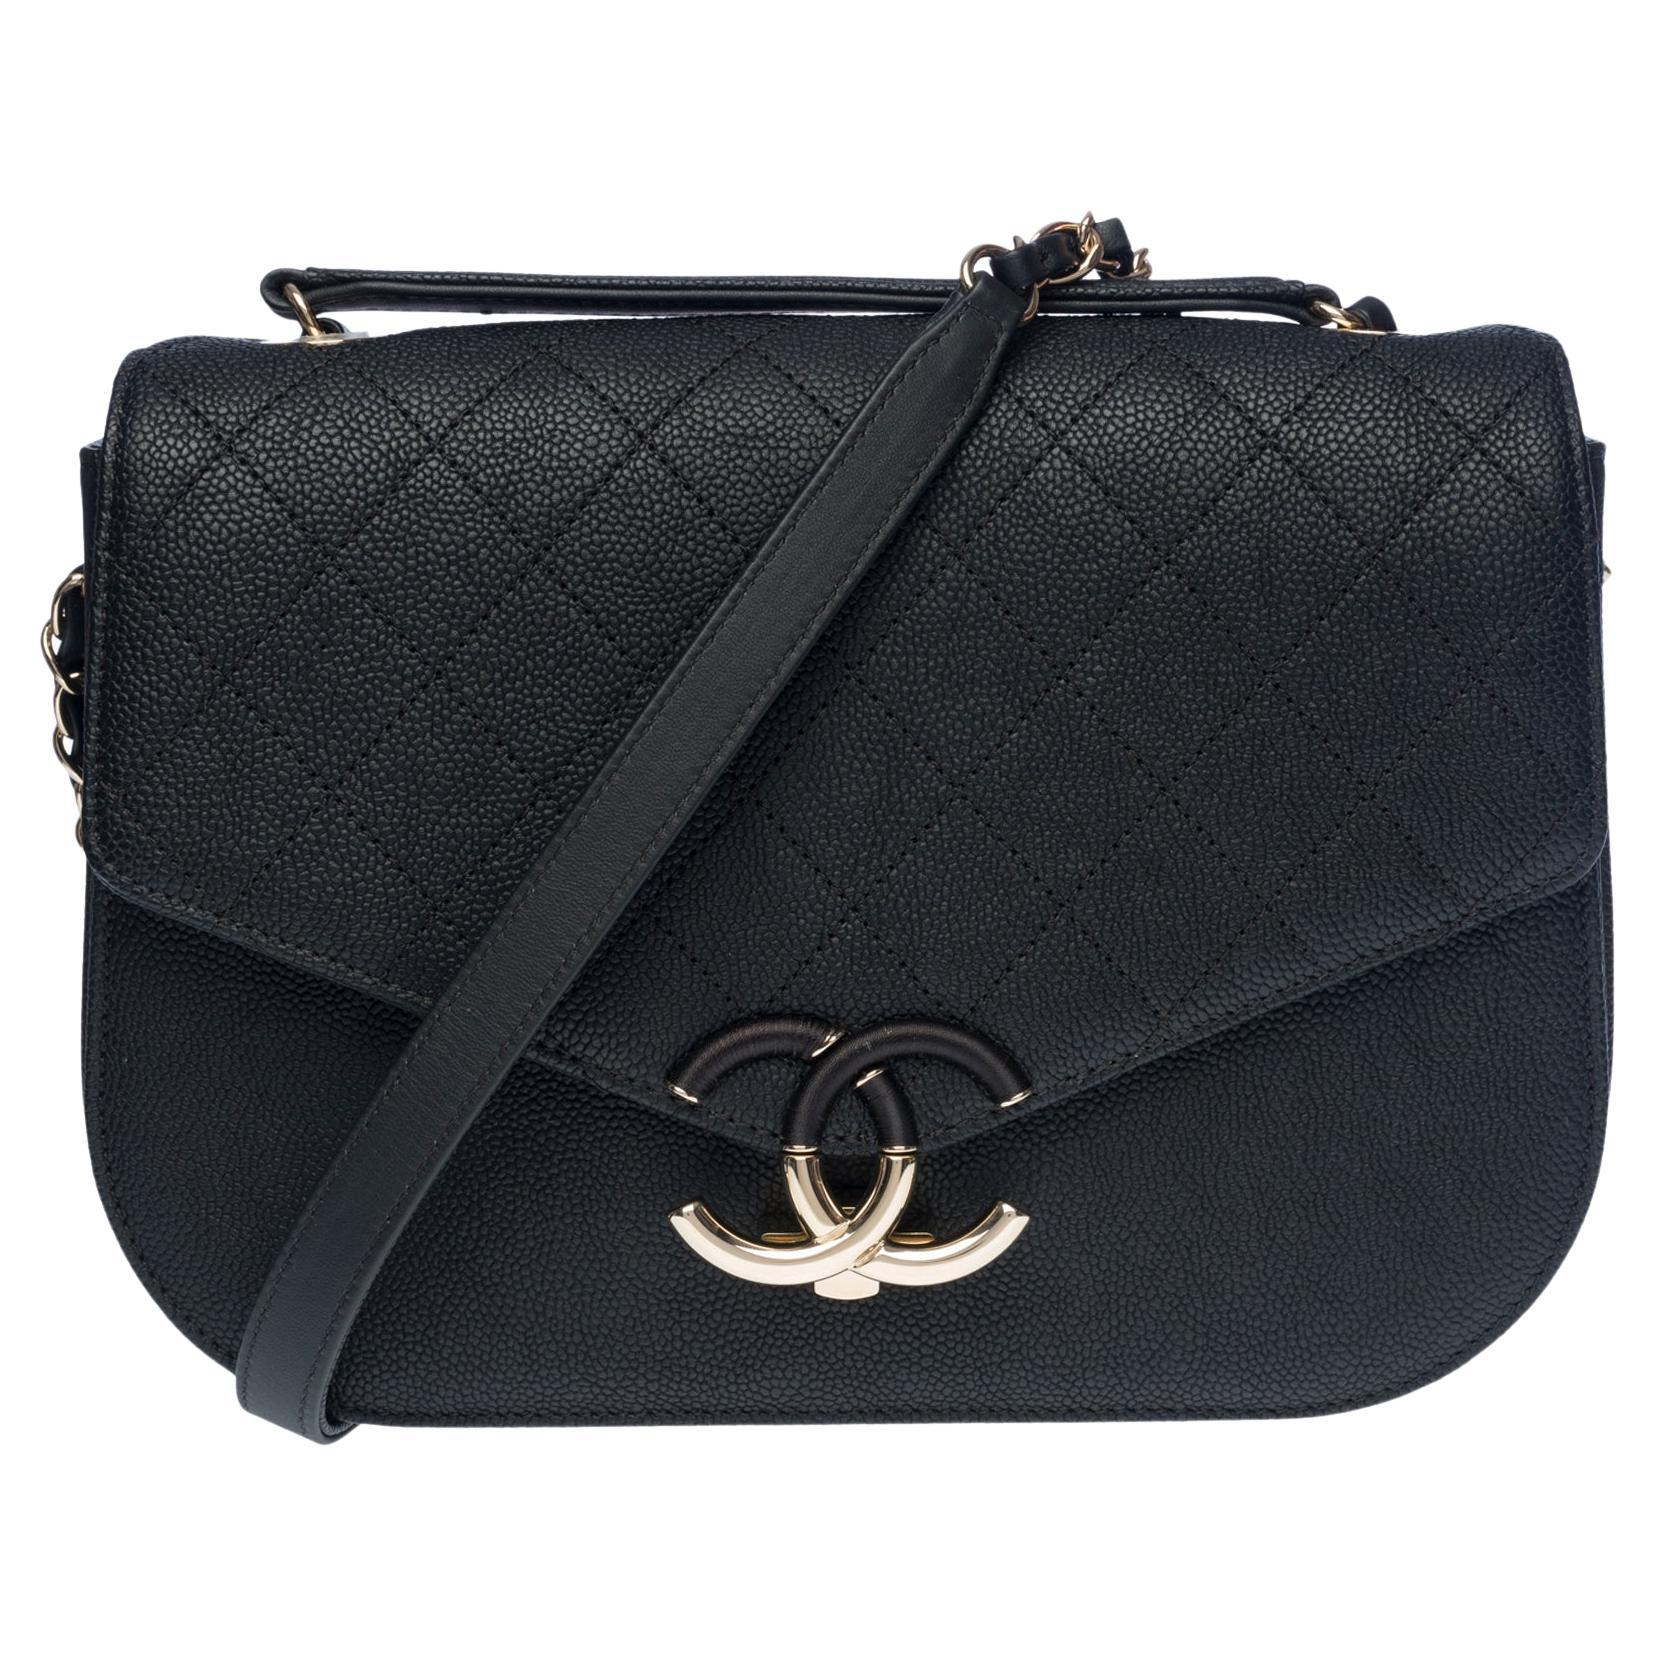 RARE Chanel Coco Cuba Medium flap bag in black caviar leather, Champagne HW  For Sale